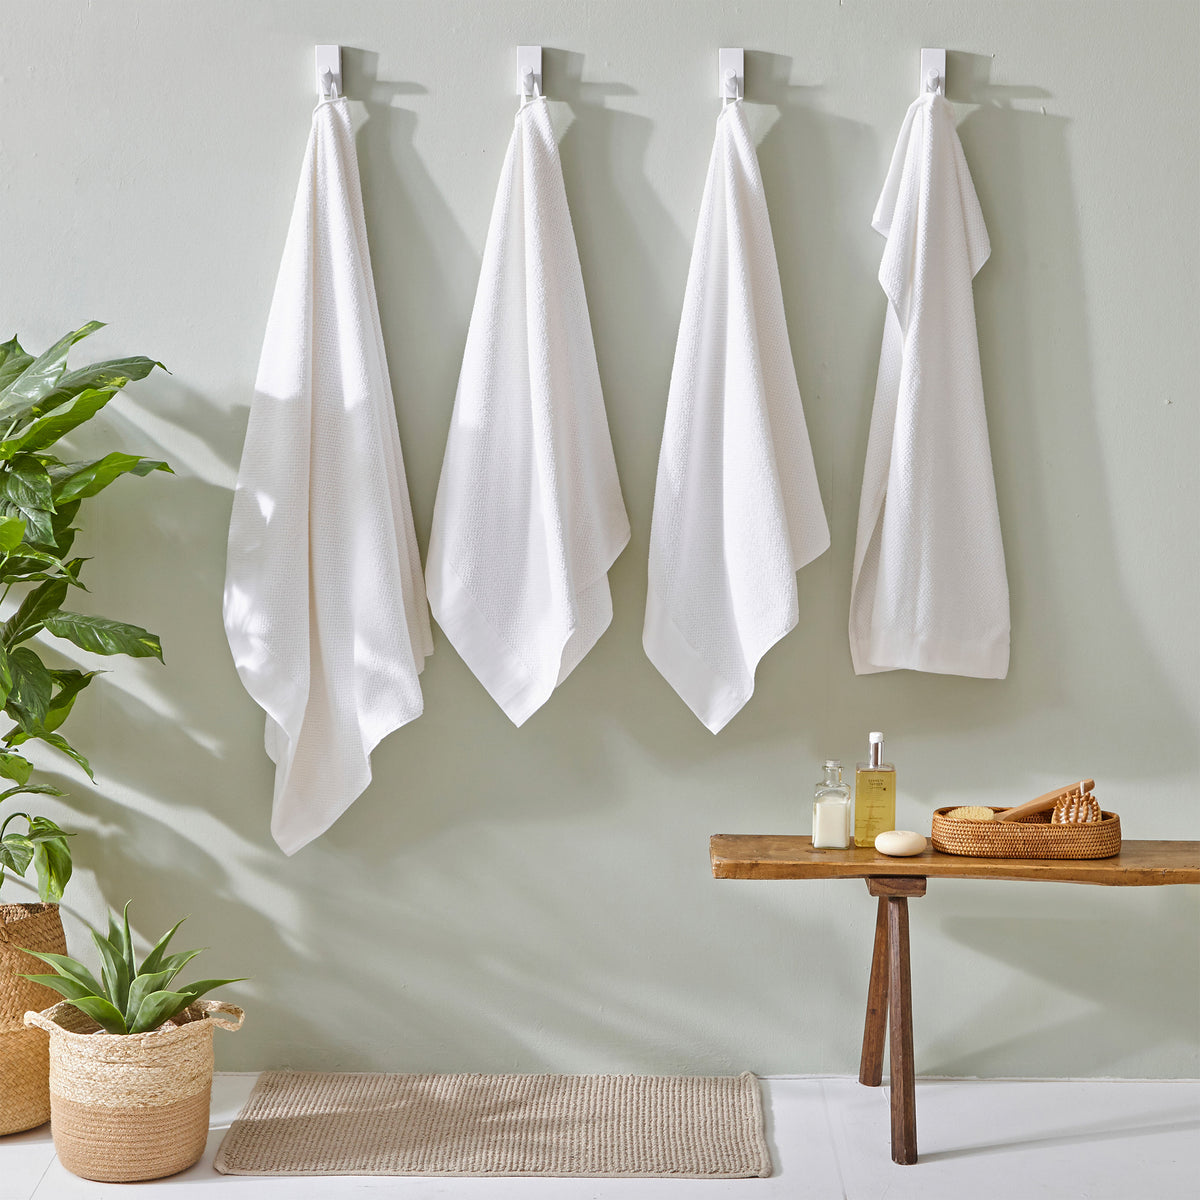 Textured 6pc Cotton Hand / Bath / Sheet Towel Set